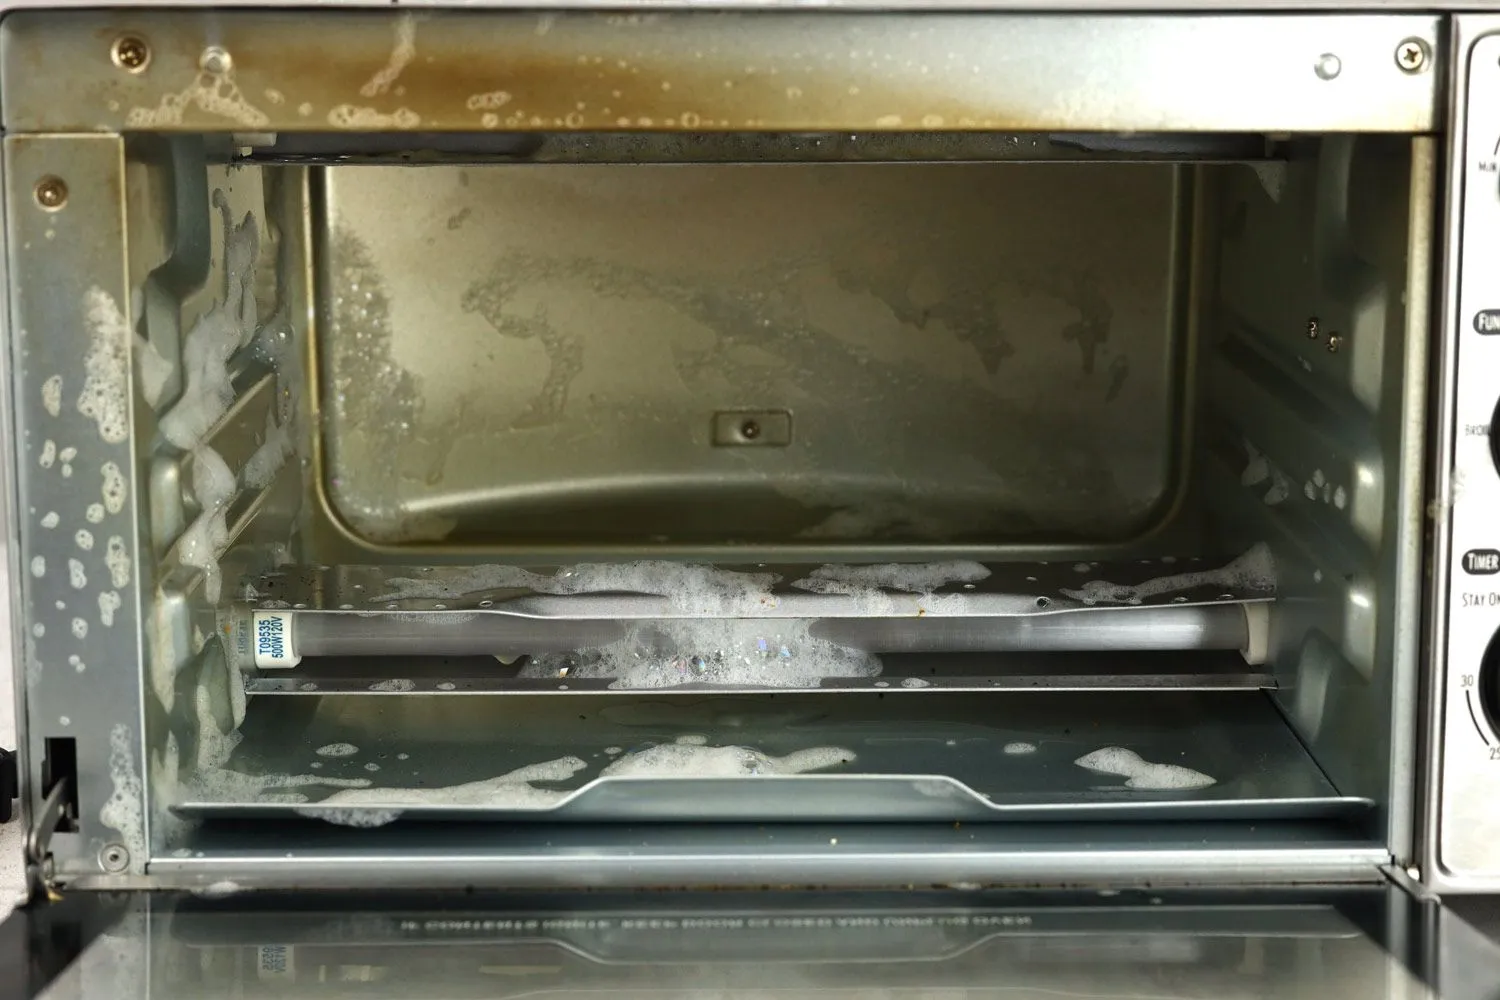 Hamilton Beach 31401 Toaster Oven & Pizza Maker In-depth Review